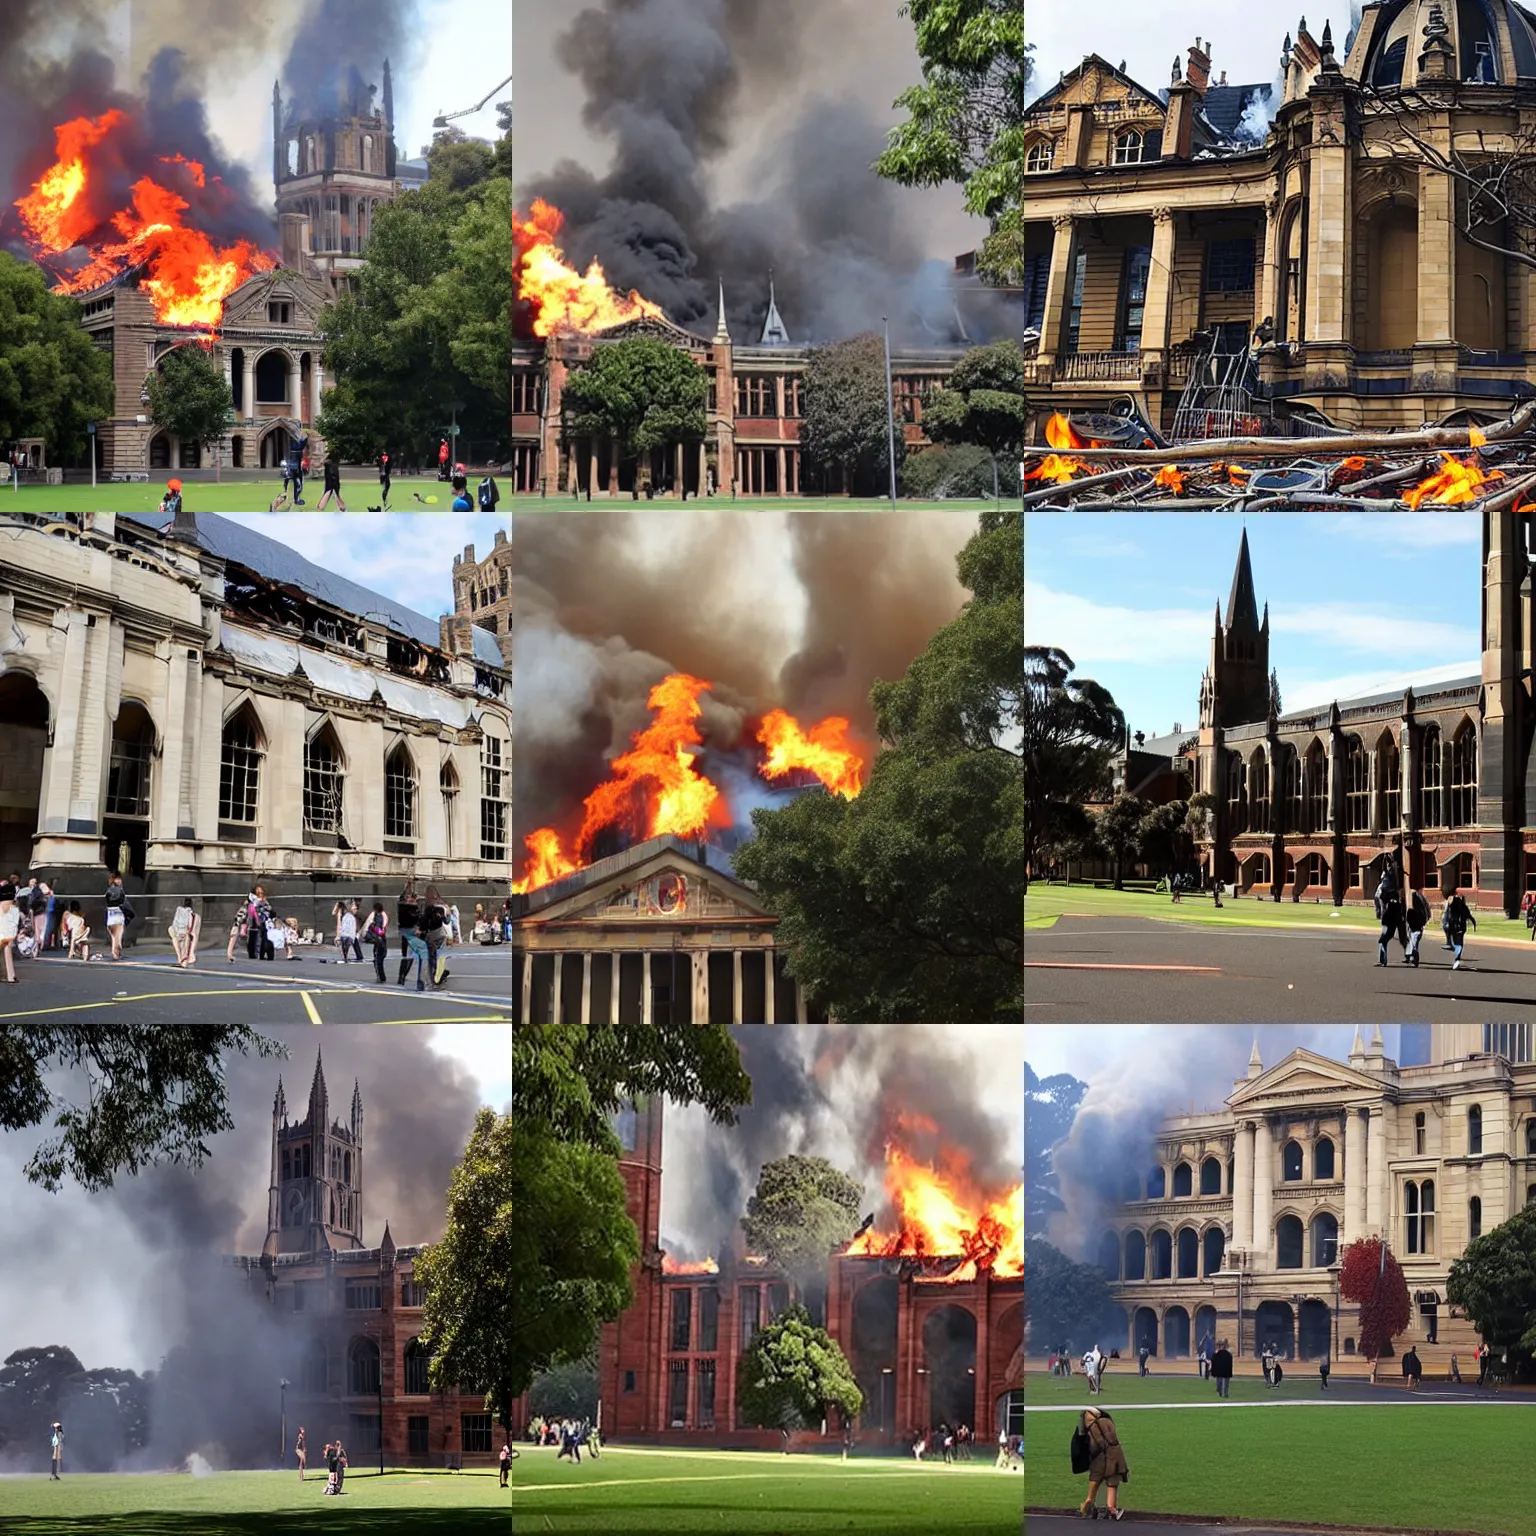 Prompt: University of Melbourne burning down